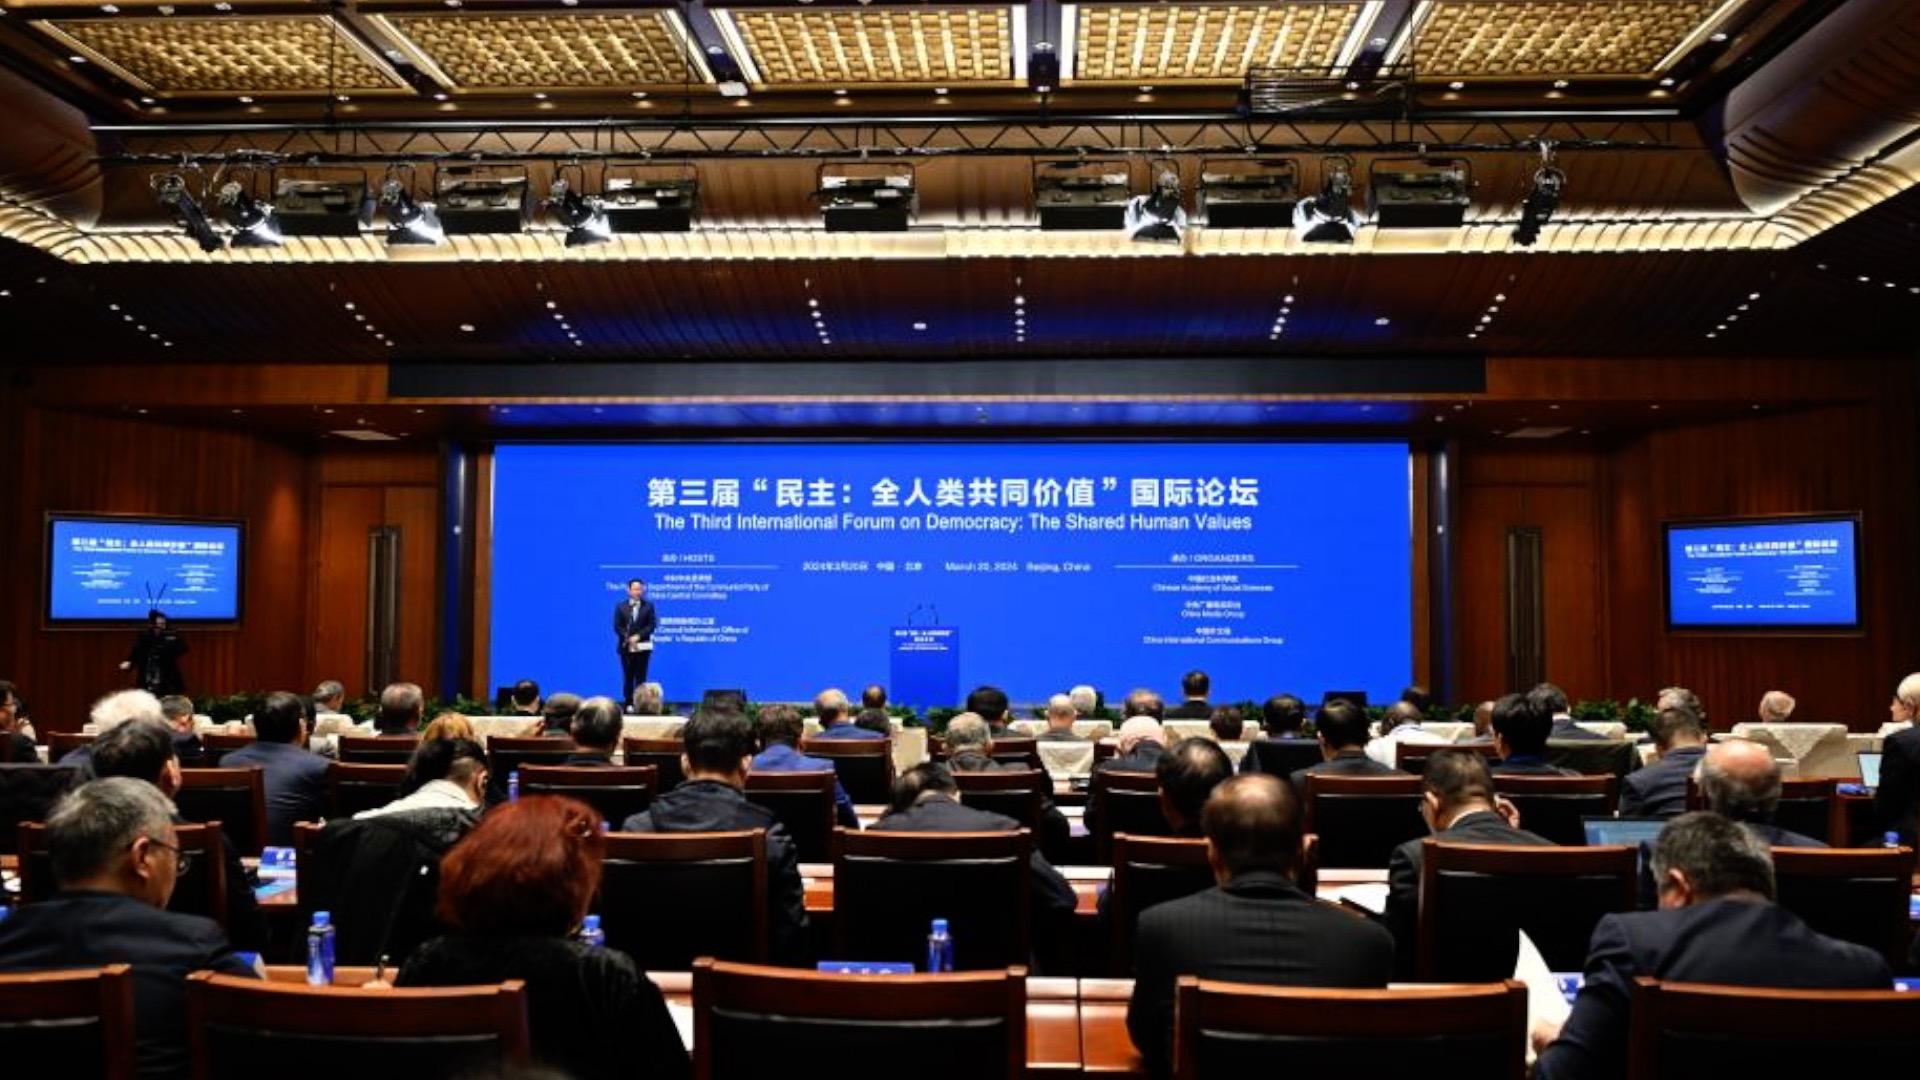 The third International Forum on Democracy kicks off in Beijing